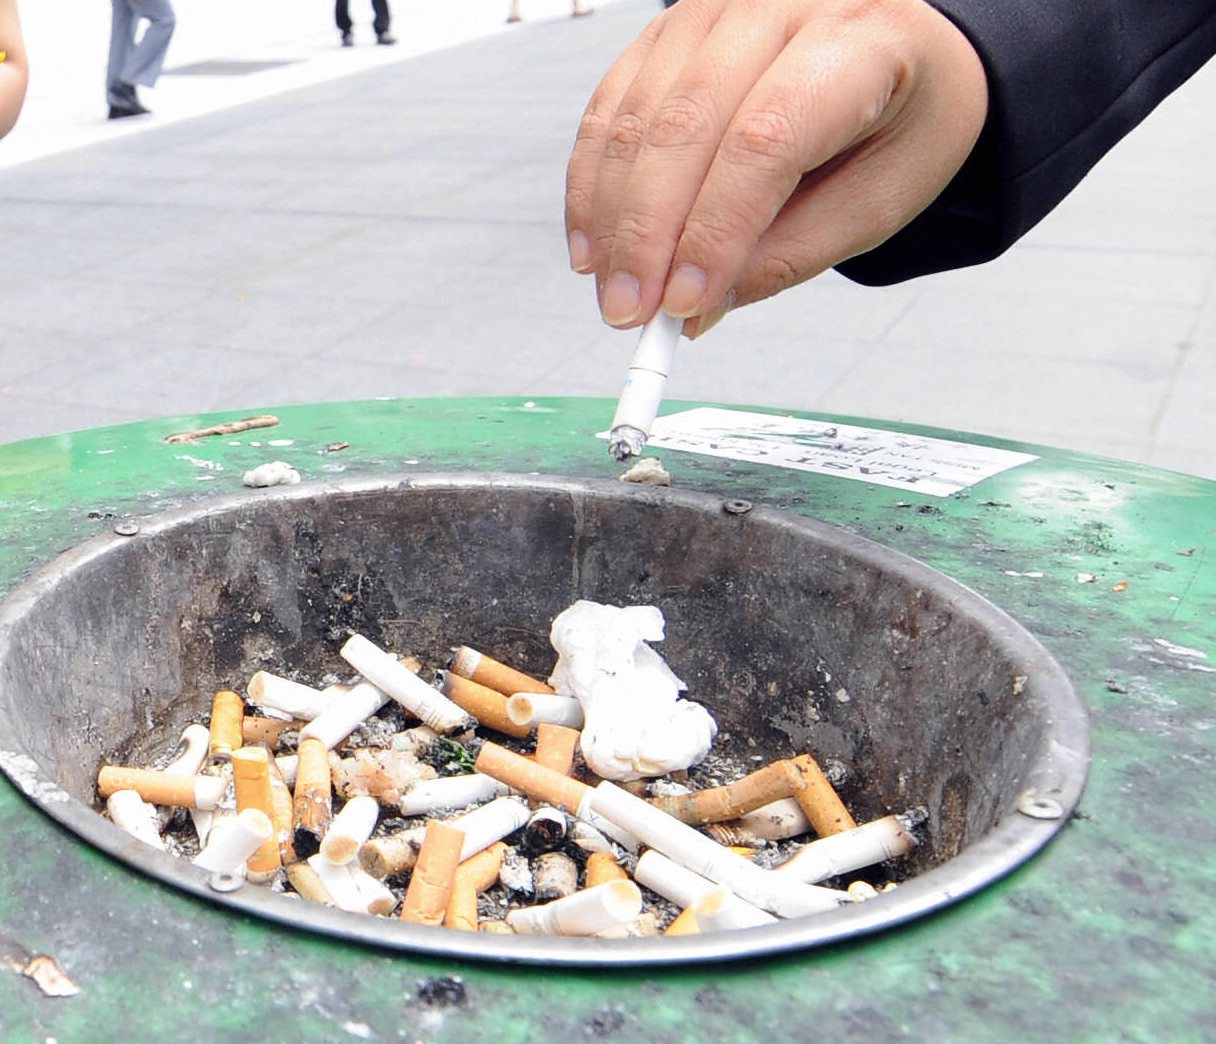 戒菸有助改善健康。（Getty Images）